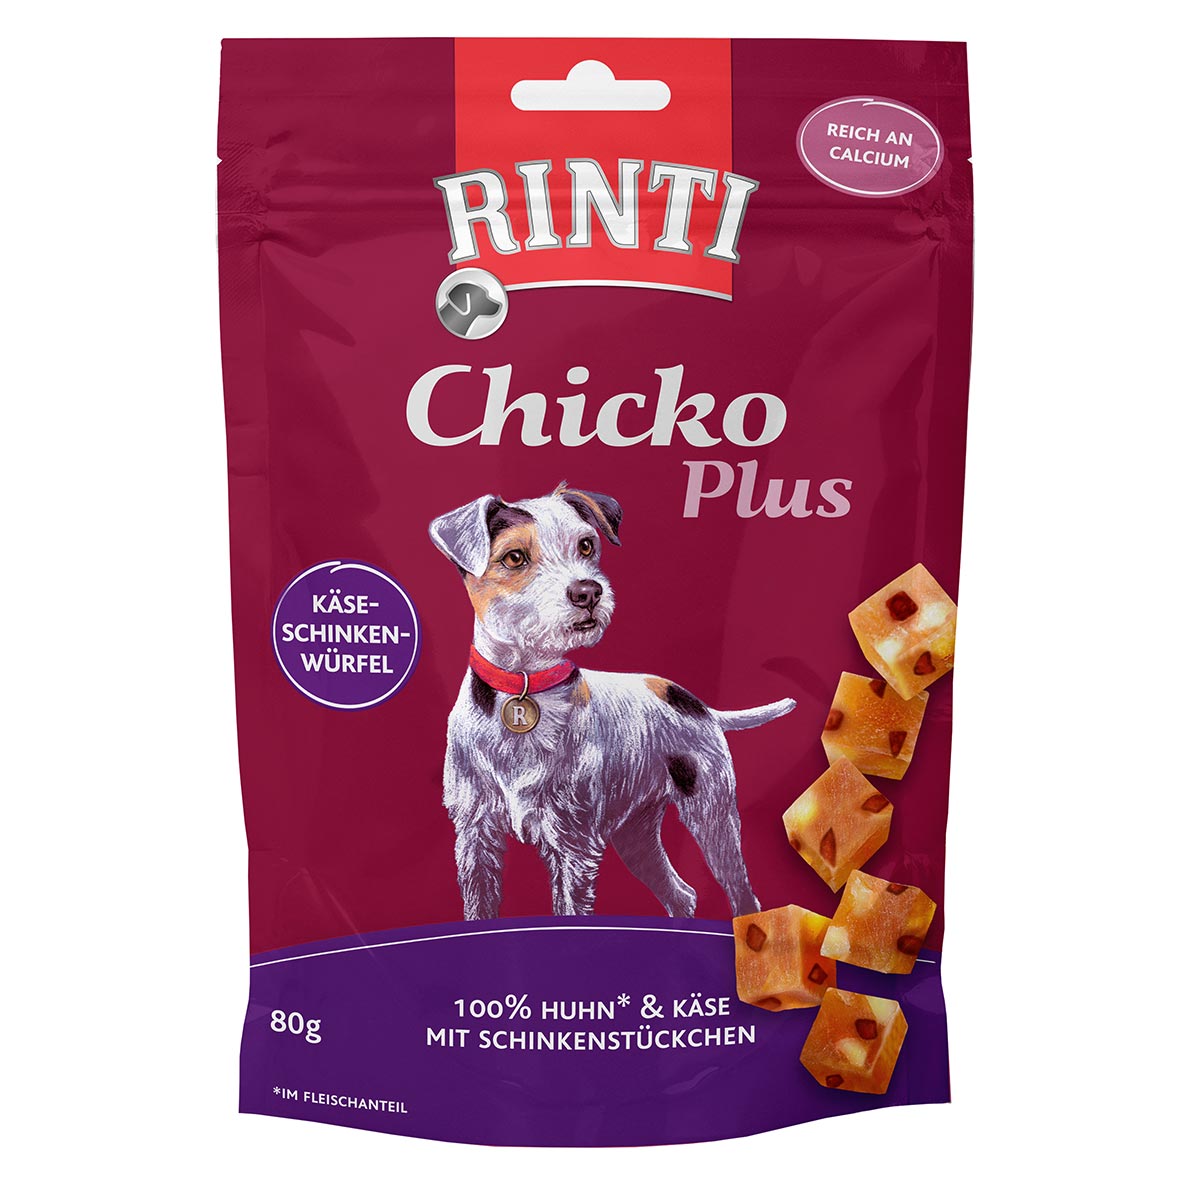 RINTI Chicko Plus Käse-Schinken-Würfel 80g